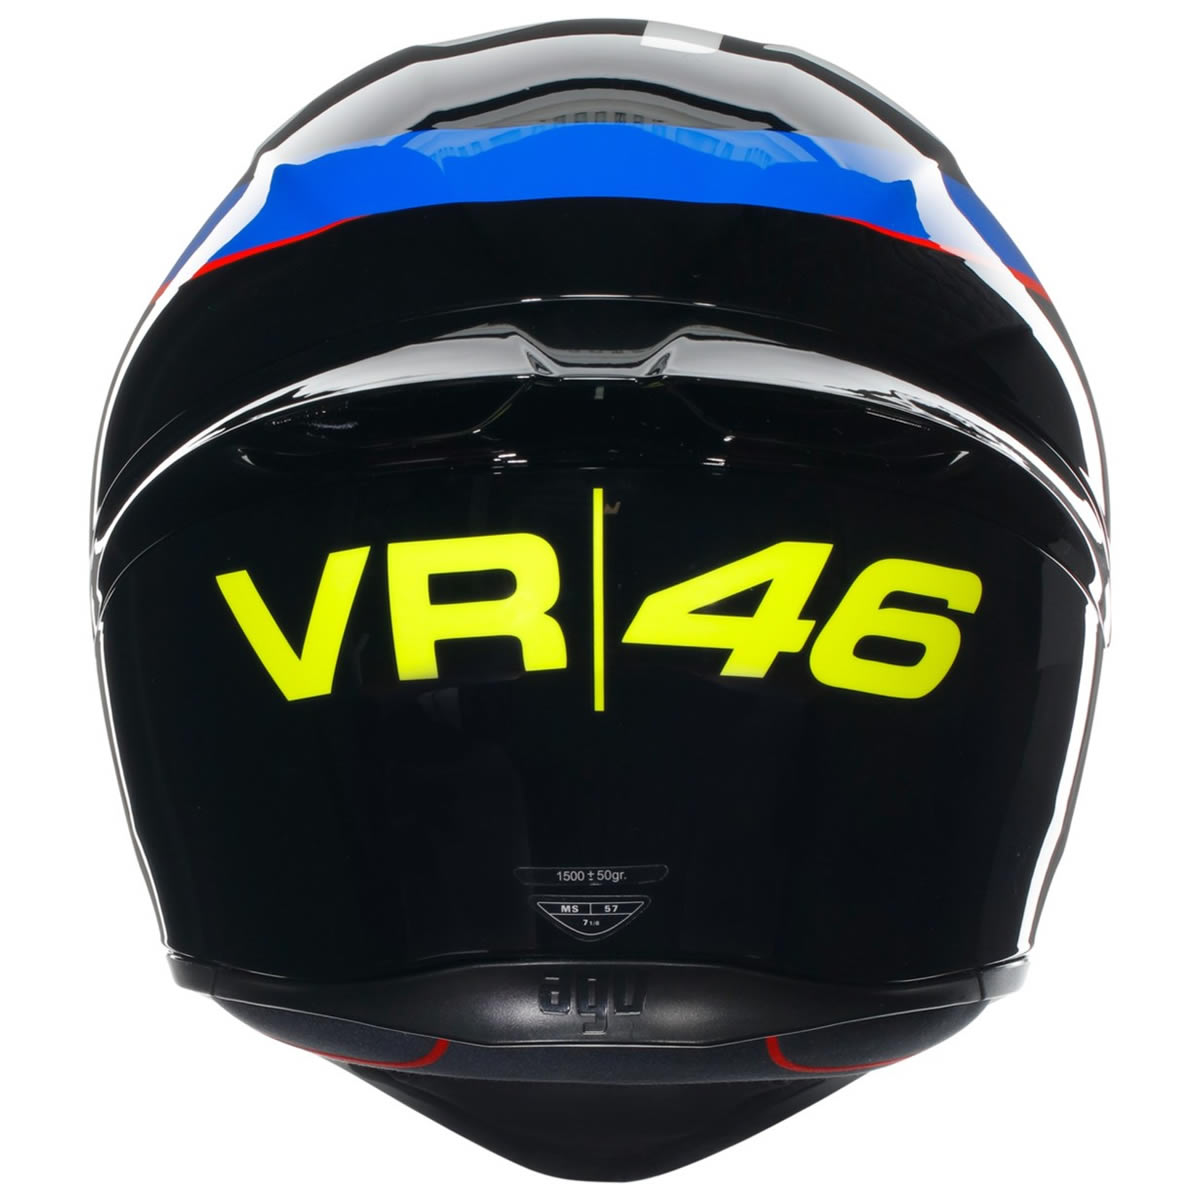 AGV K1 S VR46 Sky Racing Team Helm